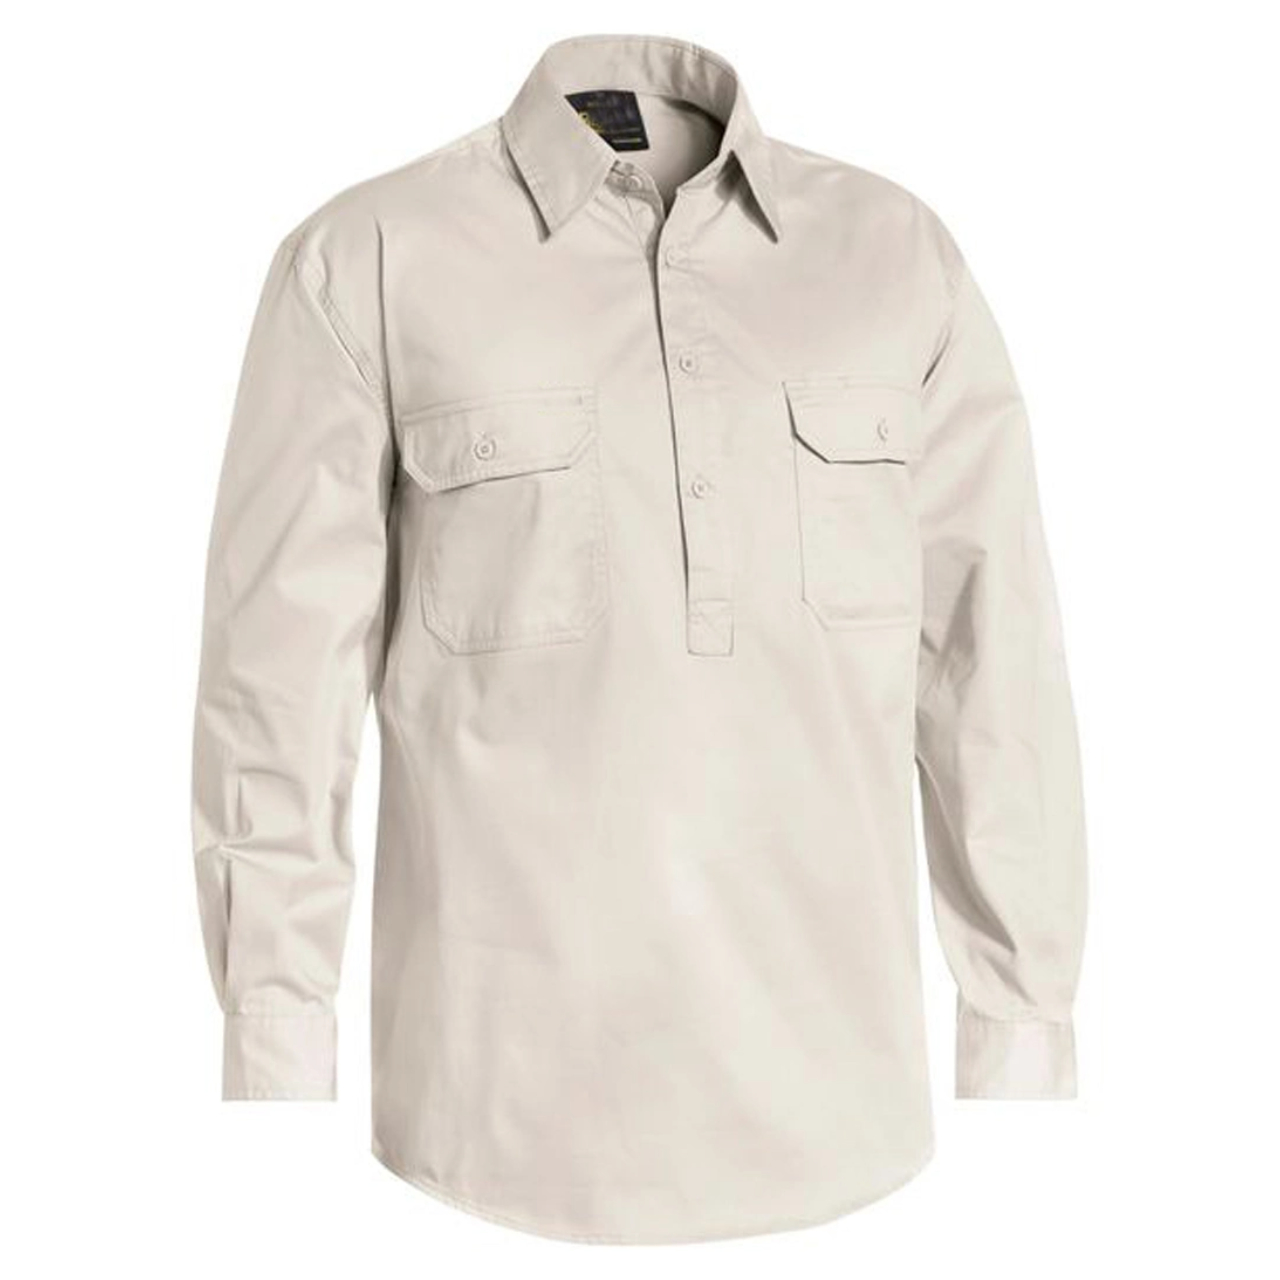 Long Sleeve Cotton Polyester Work Shirt